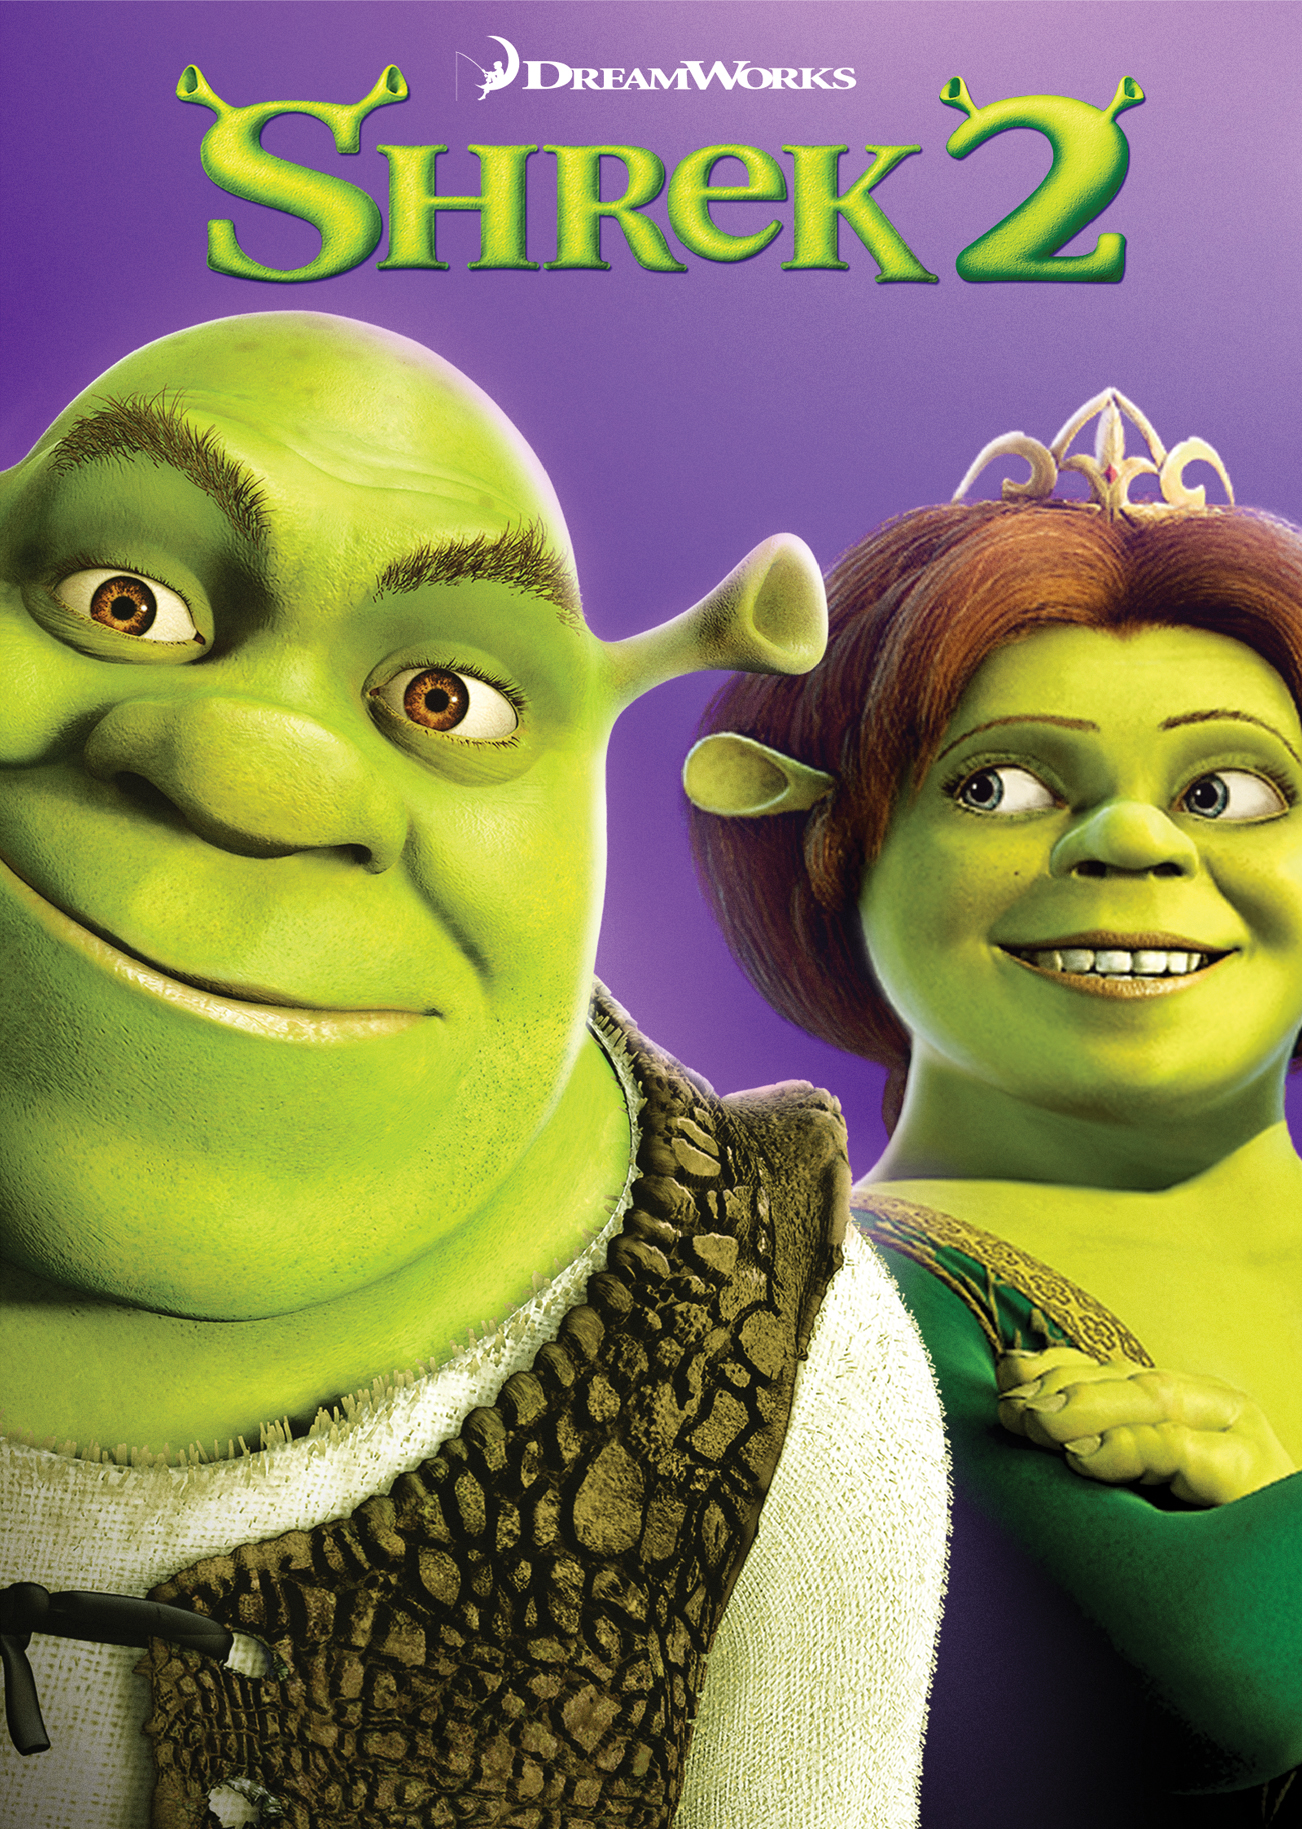 Shrek 2 Shrek Dreamworks Pirate Movies - Vrogue